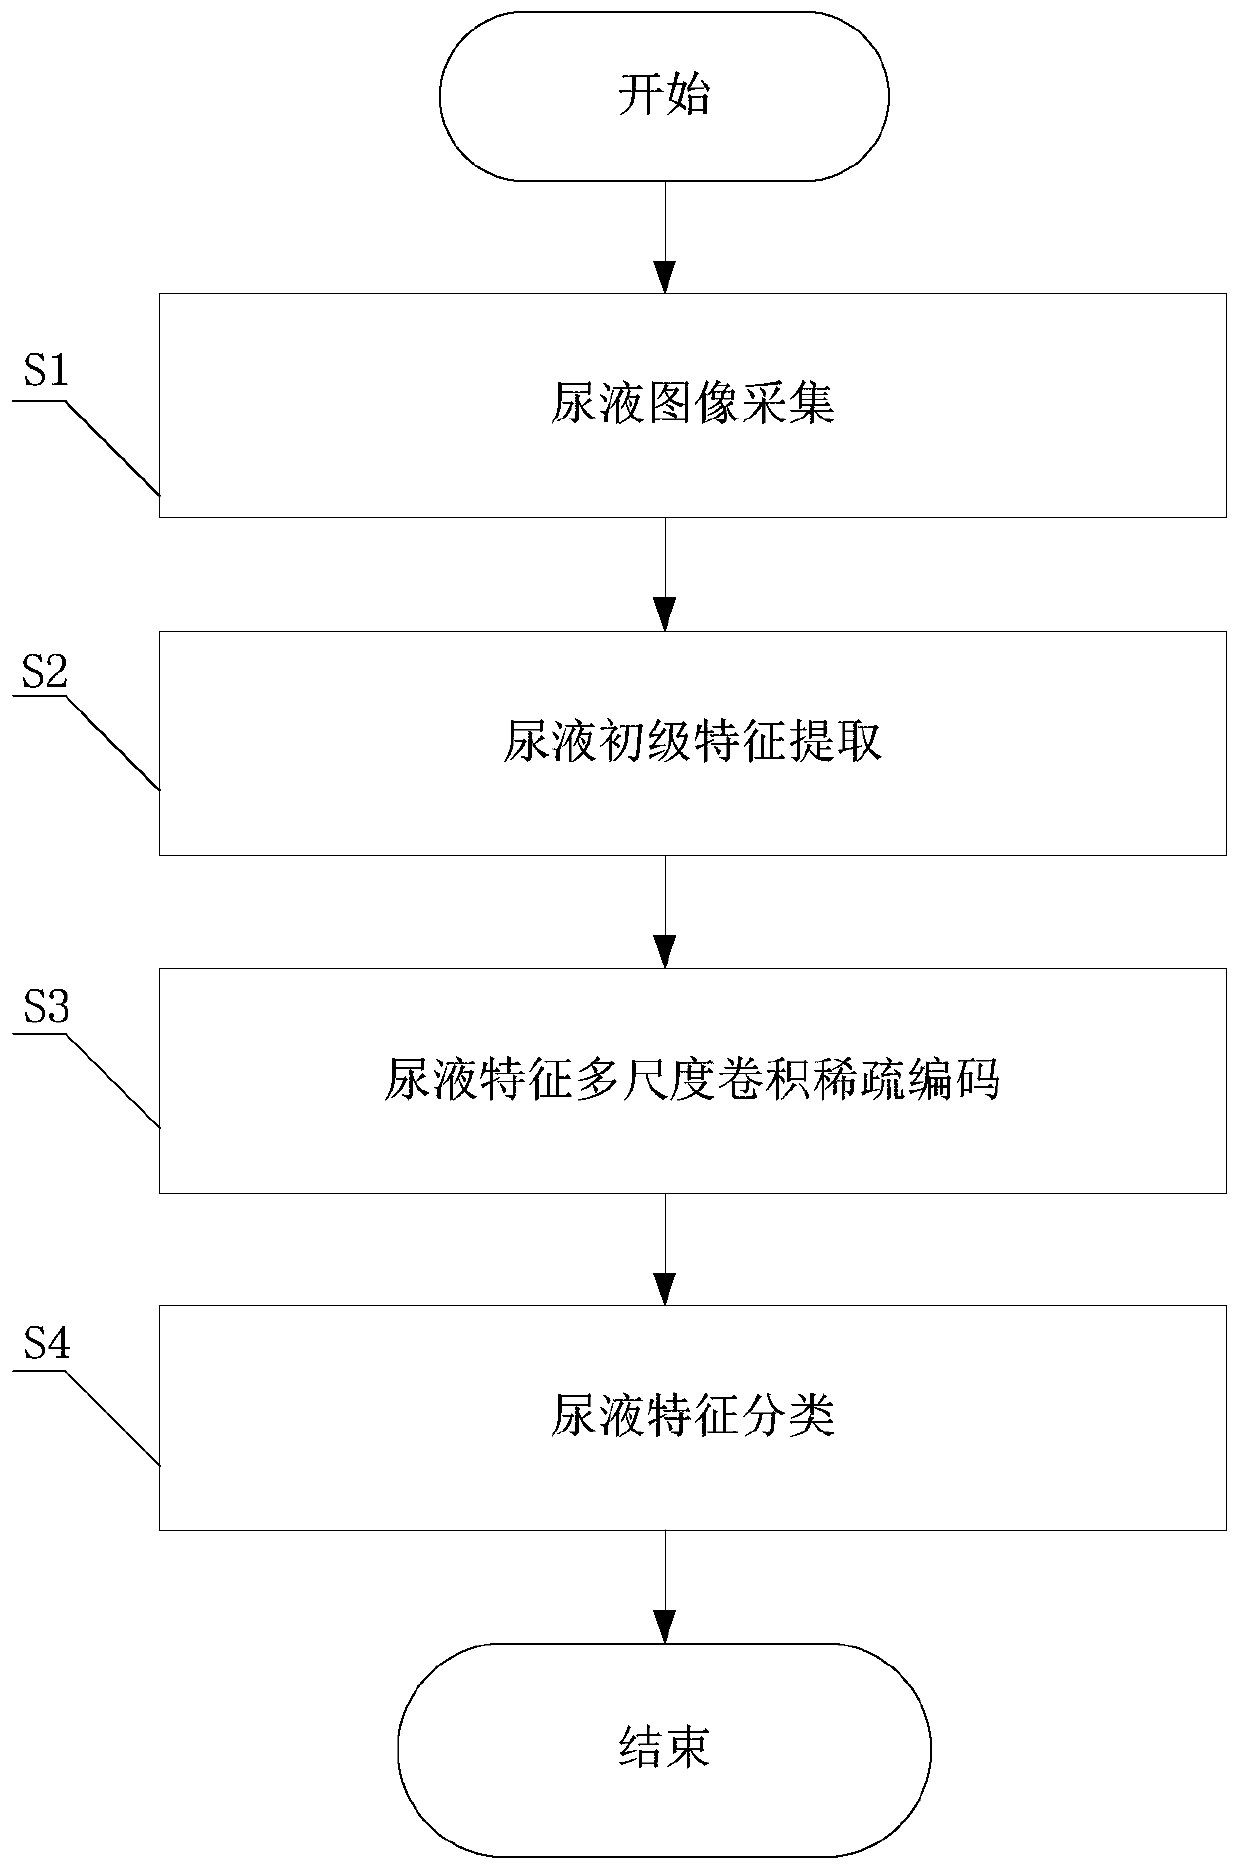 Tibetan medical urine feature classification method based on multi-scale convolution sparse coding